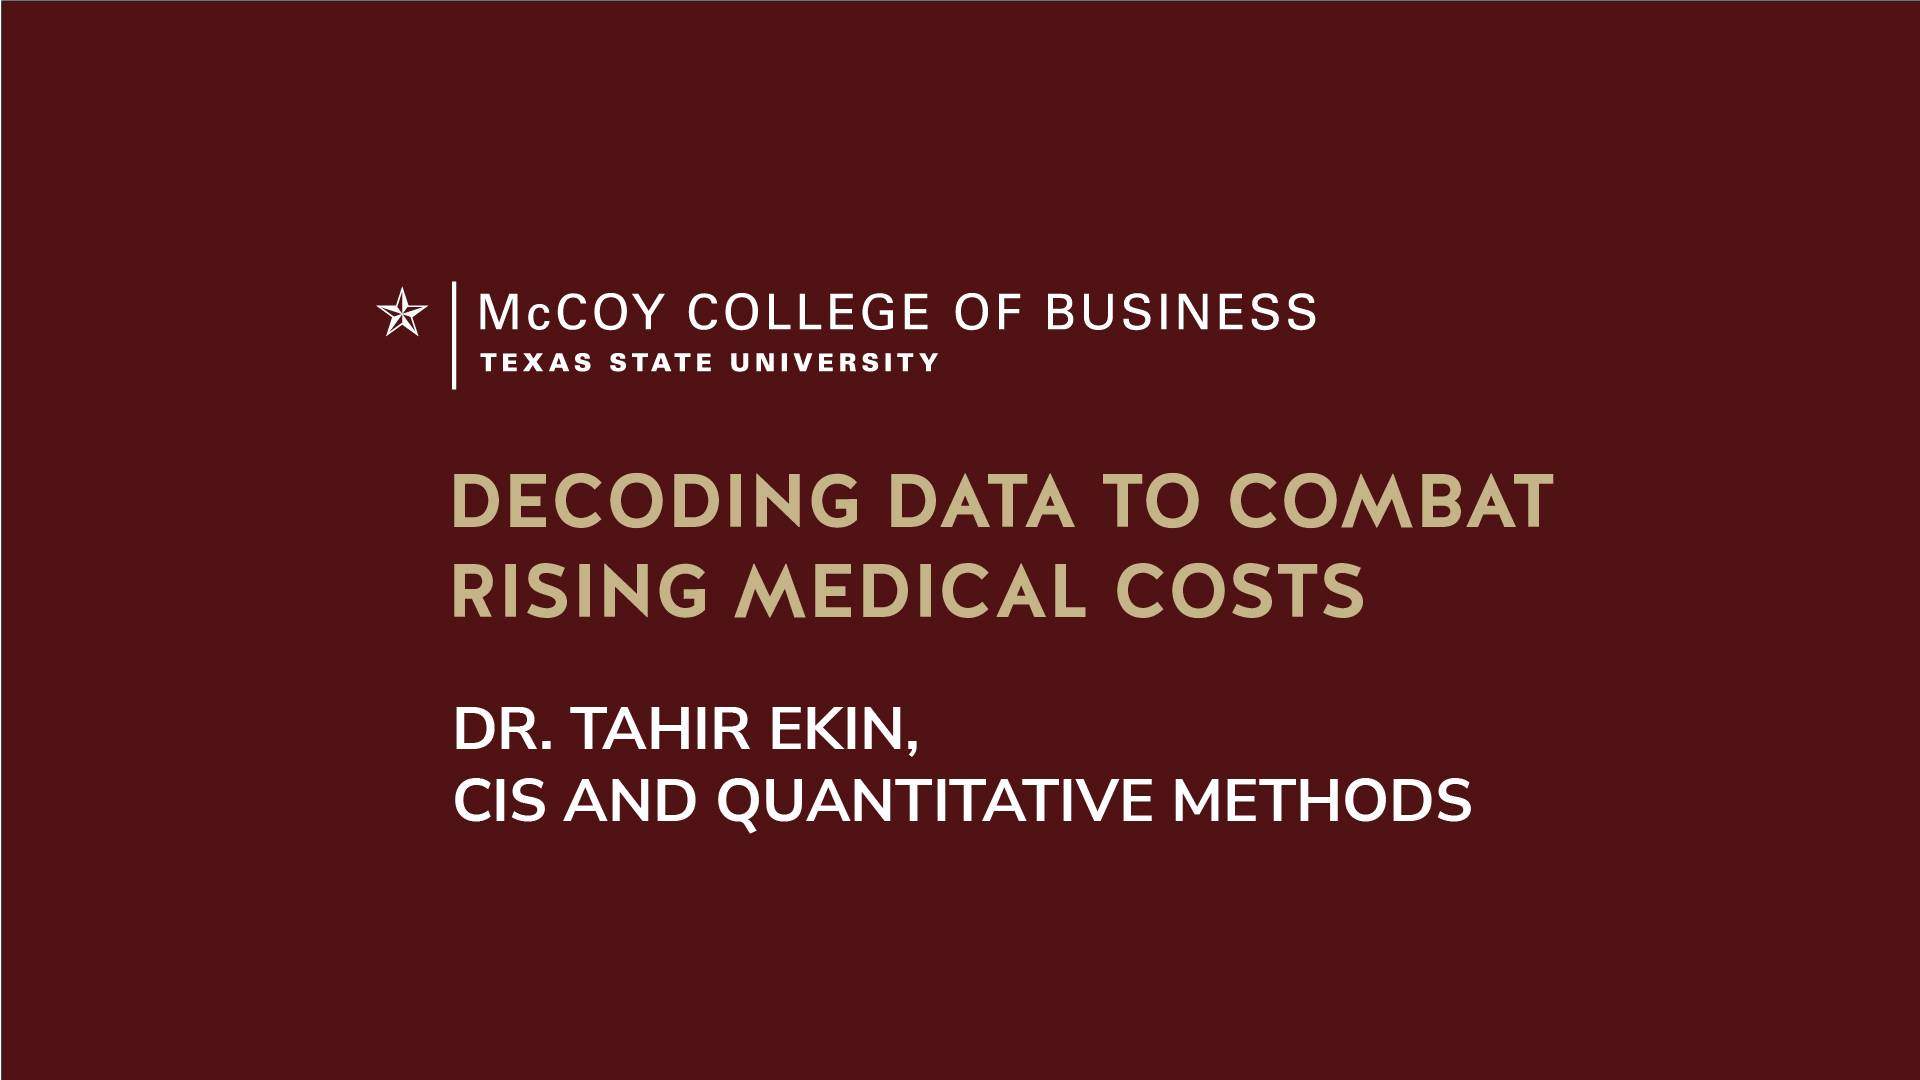 Dr. Tahir Ekin discusses Decoding Data to Combat Rising Medical Costs